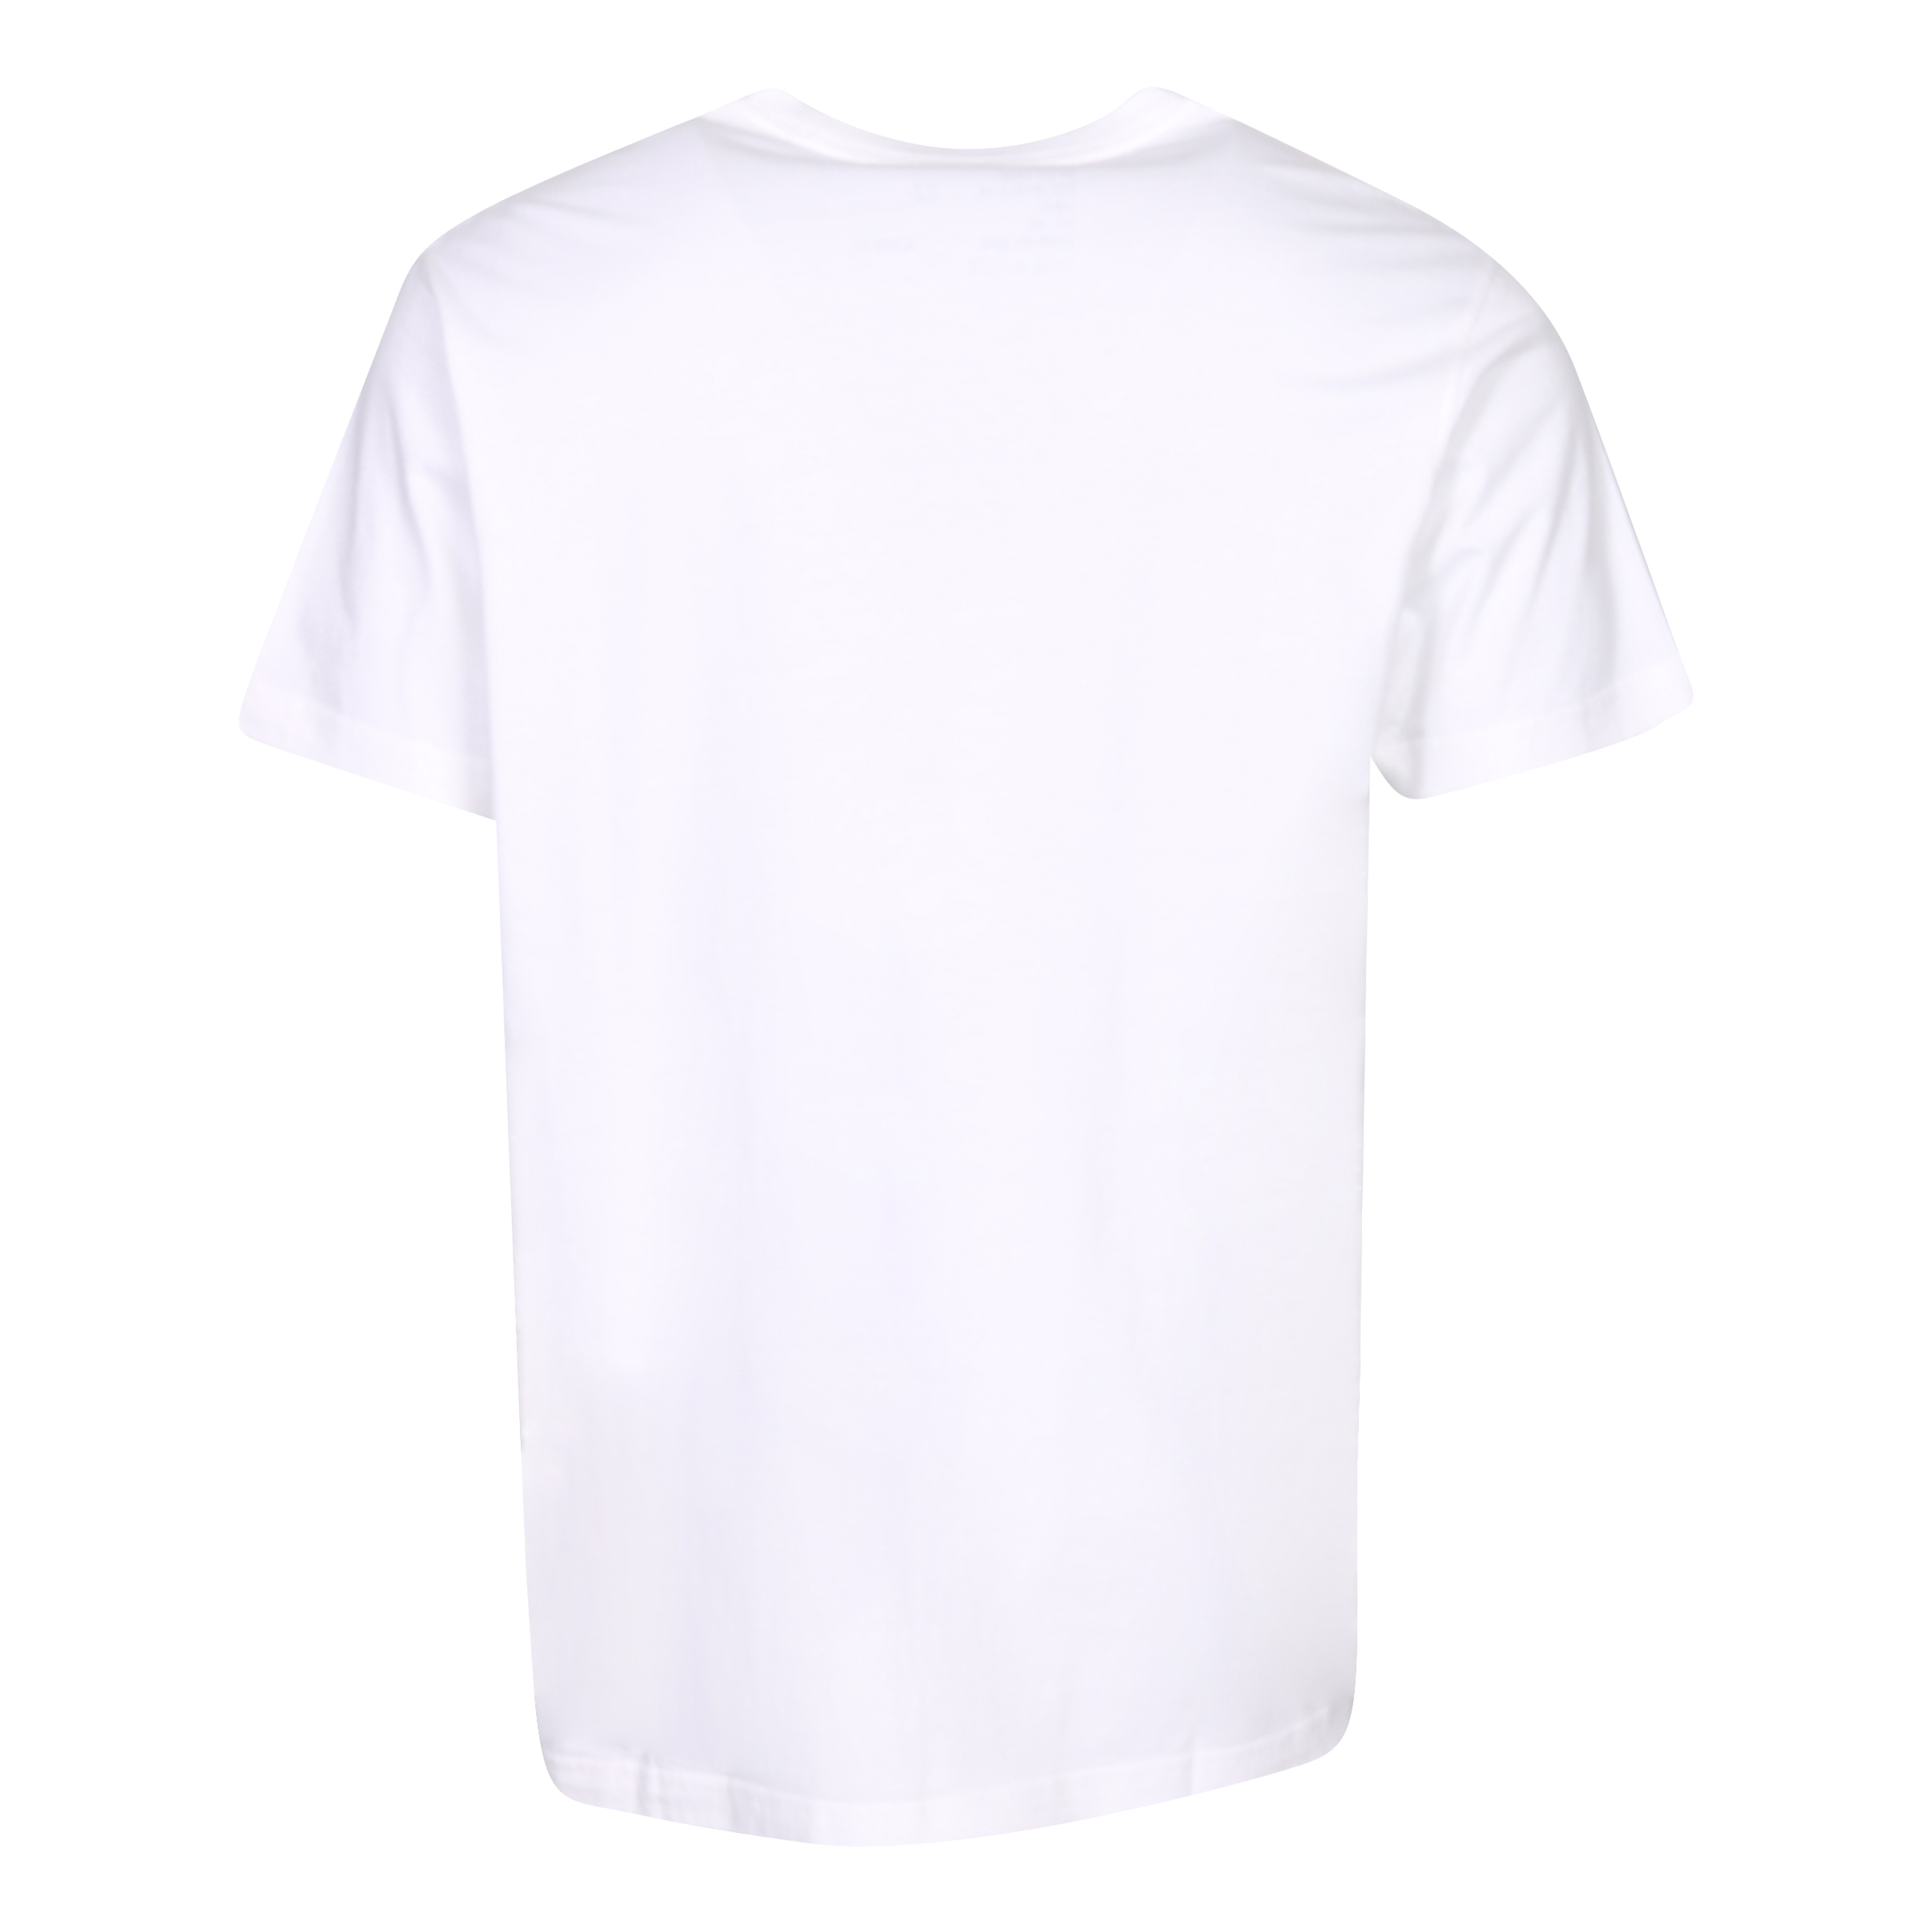 Maharishi Tibetan Dragon T-Shirt in White S